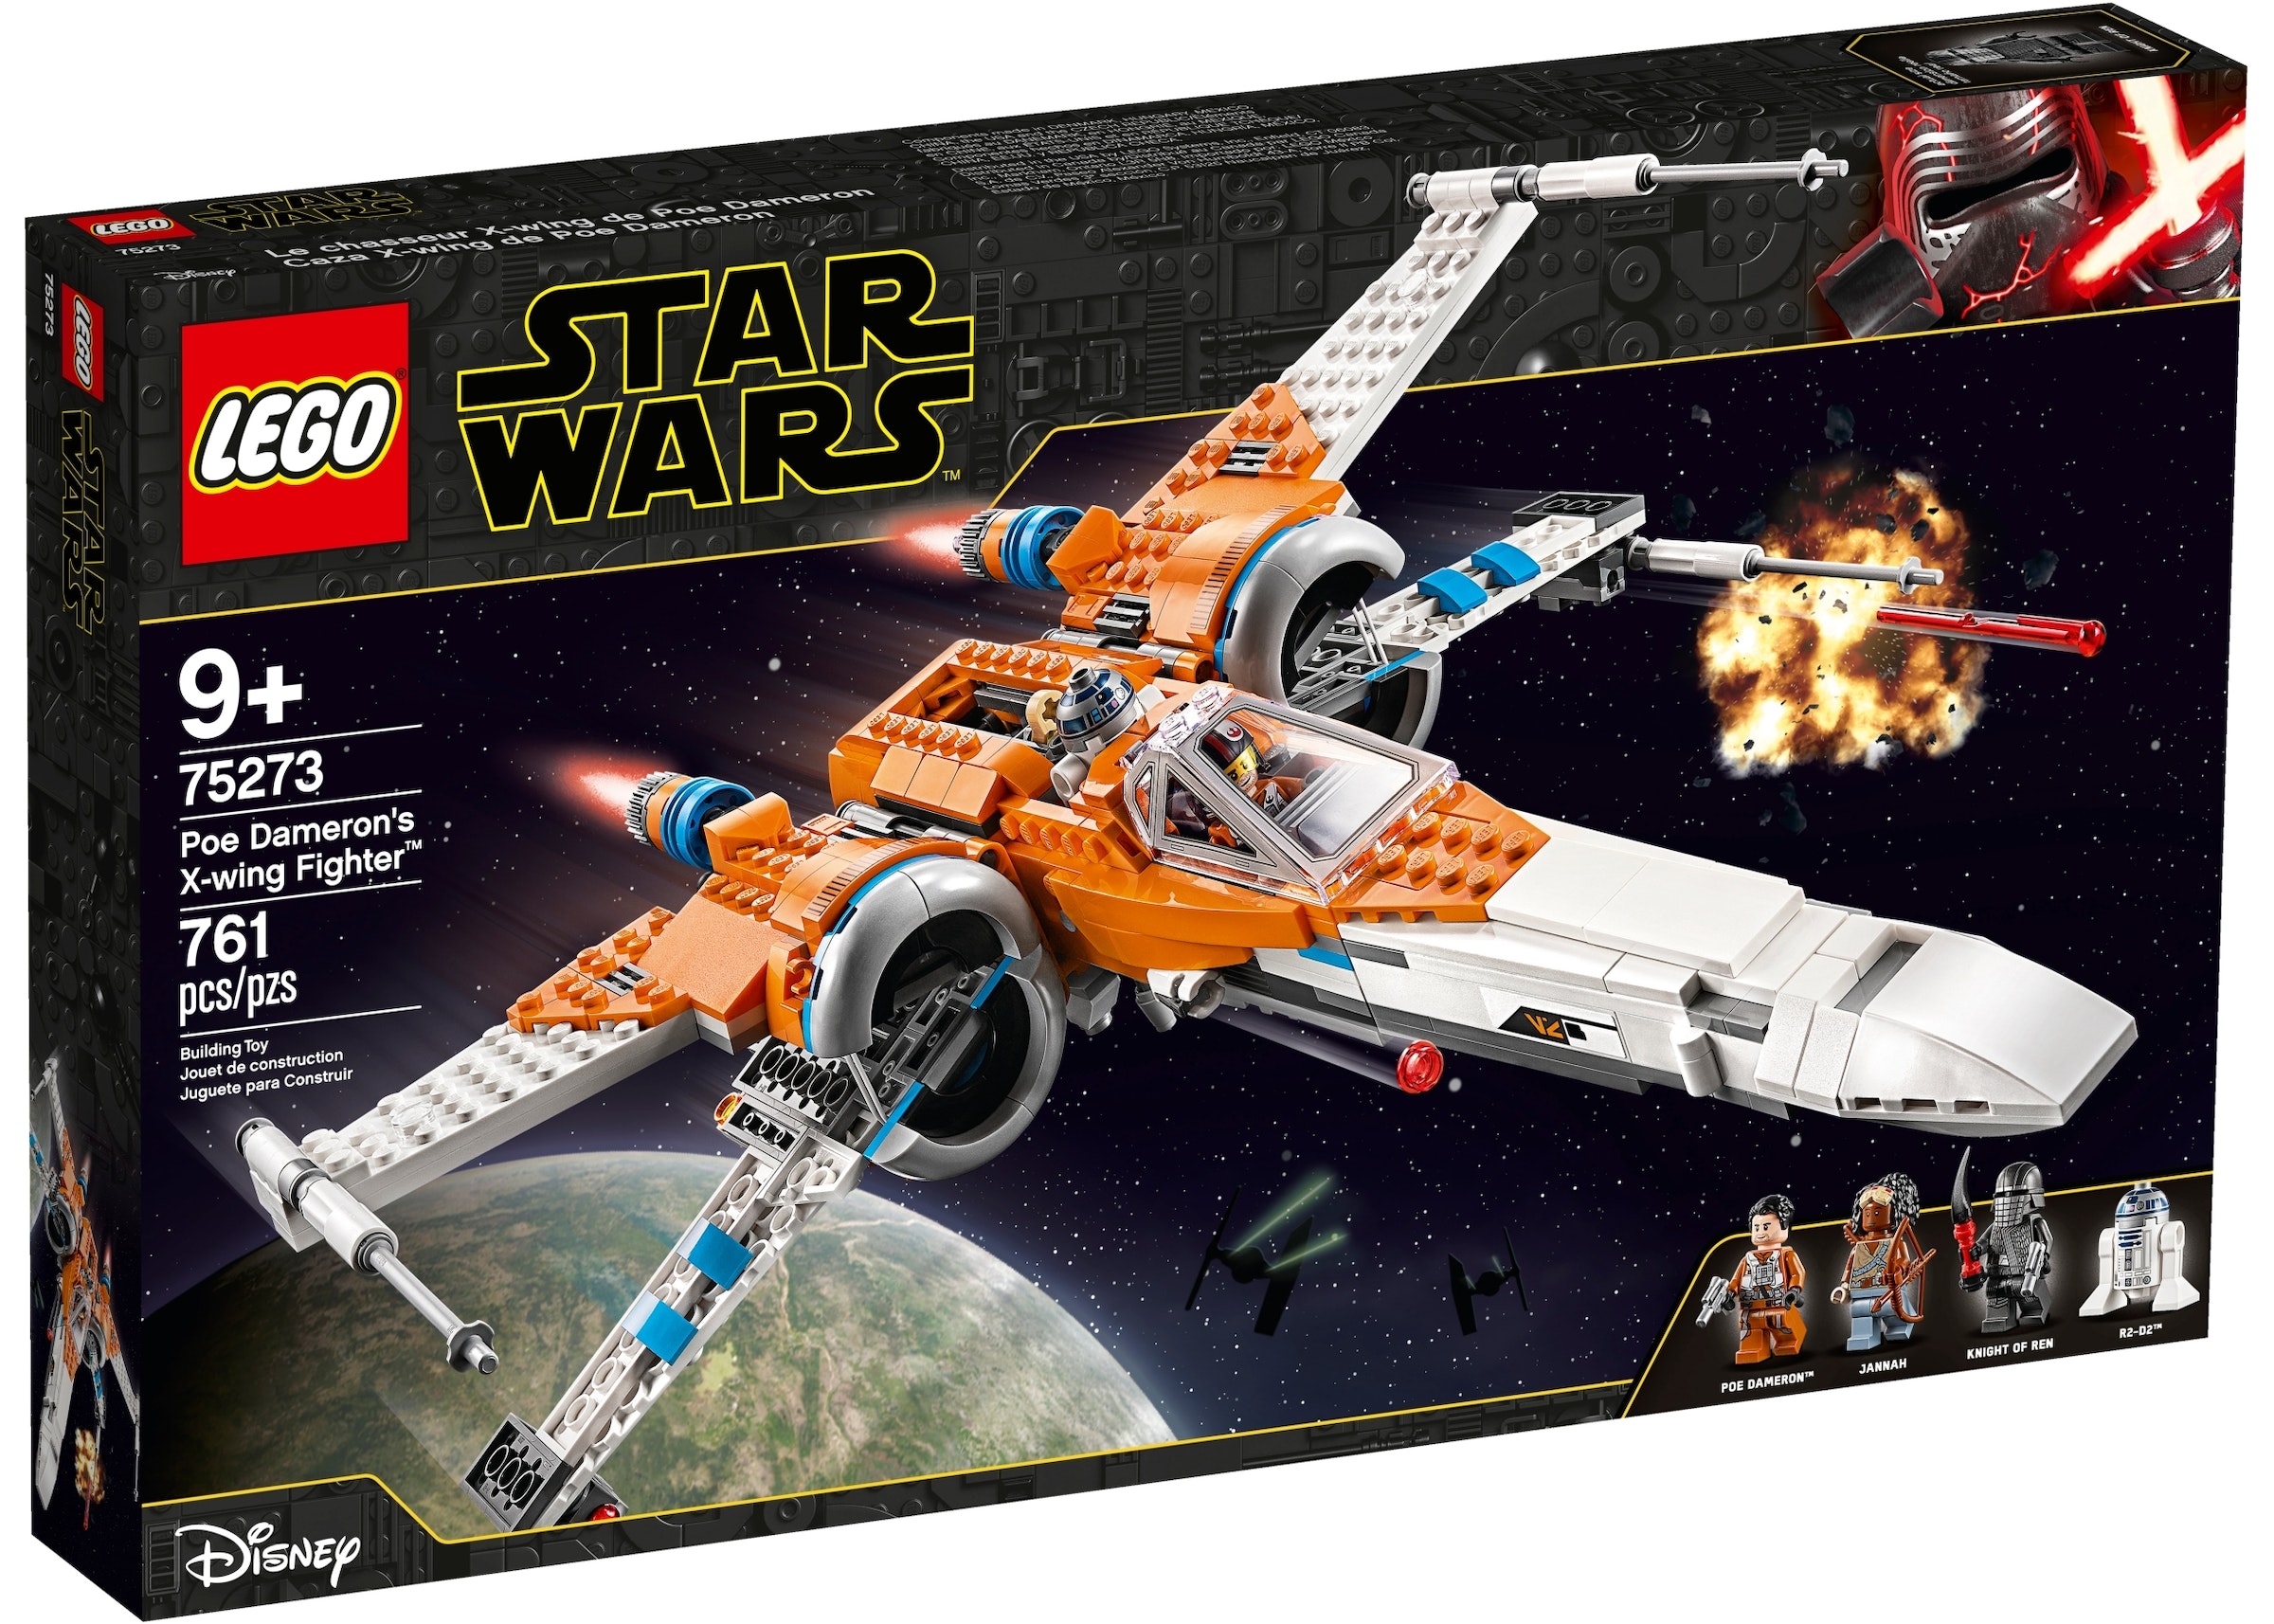 depositum skuffet pædagog LEGO Star Wars Poe Dameron's X-wing Fighter Set 75273 - US